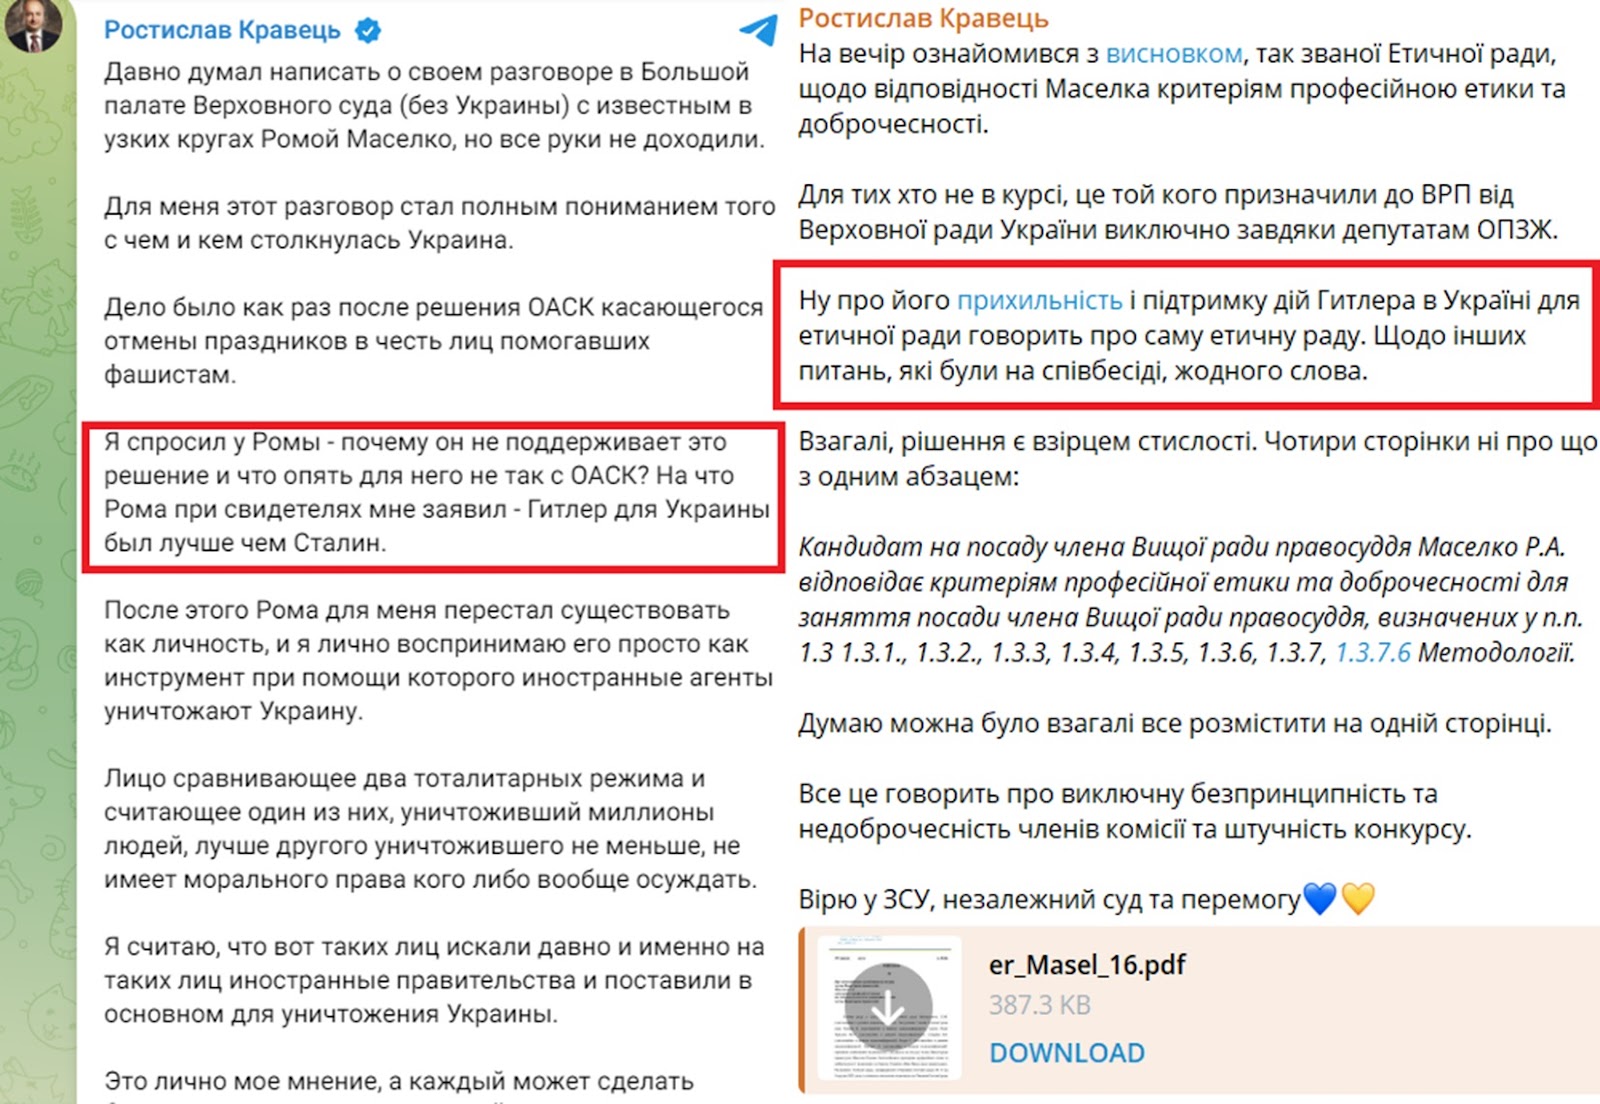 Скрини Telegram-каналу Ростислава Кравця